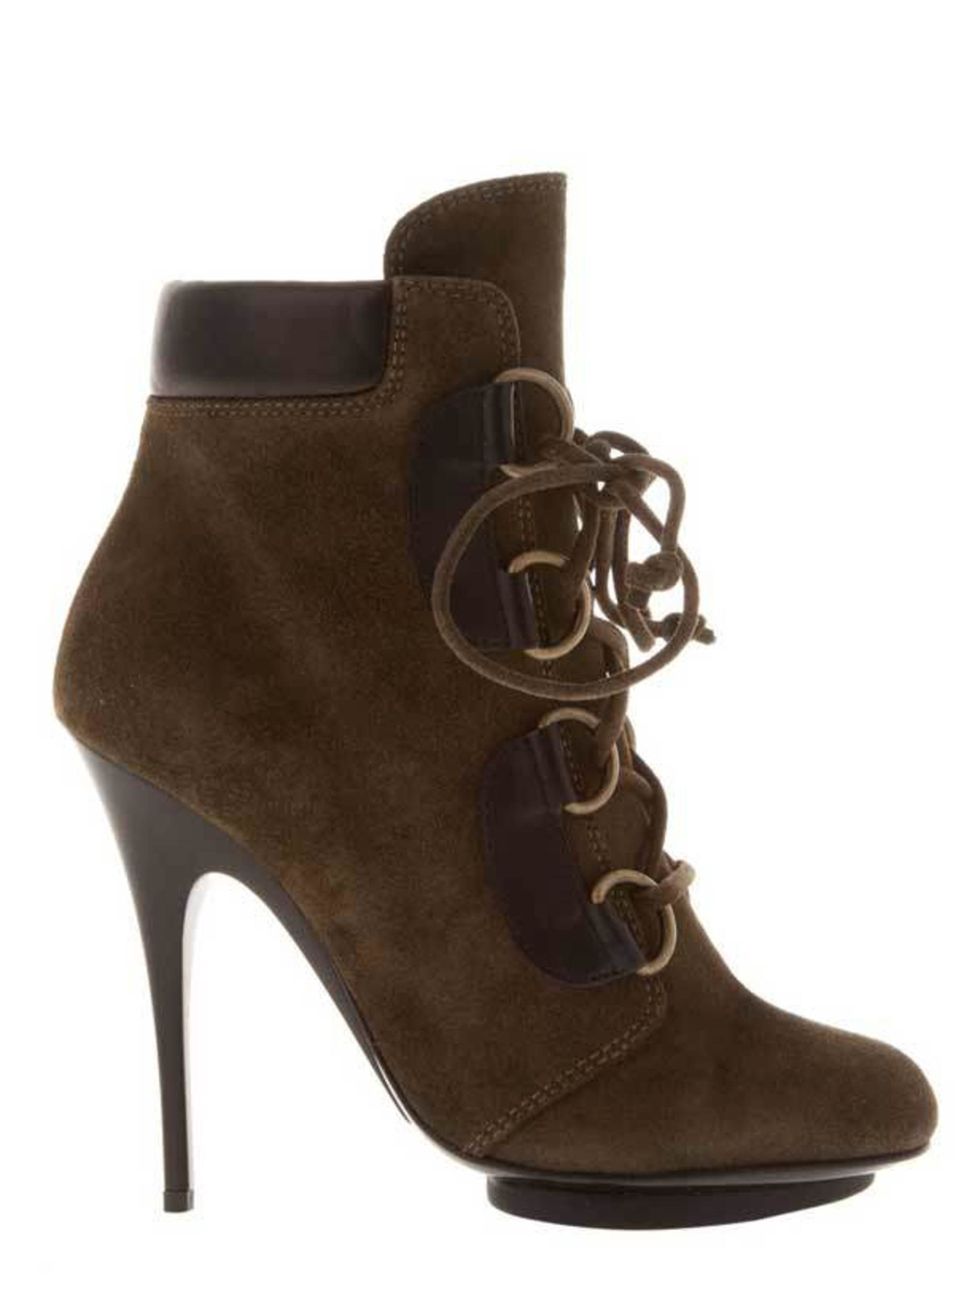 <p>Giuseppe Zanotti suede lace up boot, £634, at <a href="http://www.farfetch.com/shopping/women/giuseppe-zanotti/item10048695.aspx">farfetch.com</a> </p>